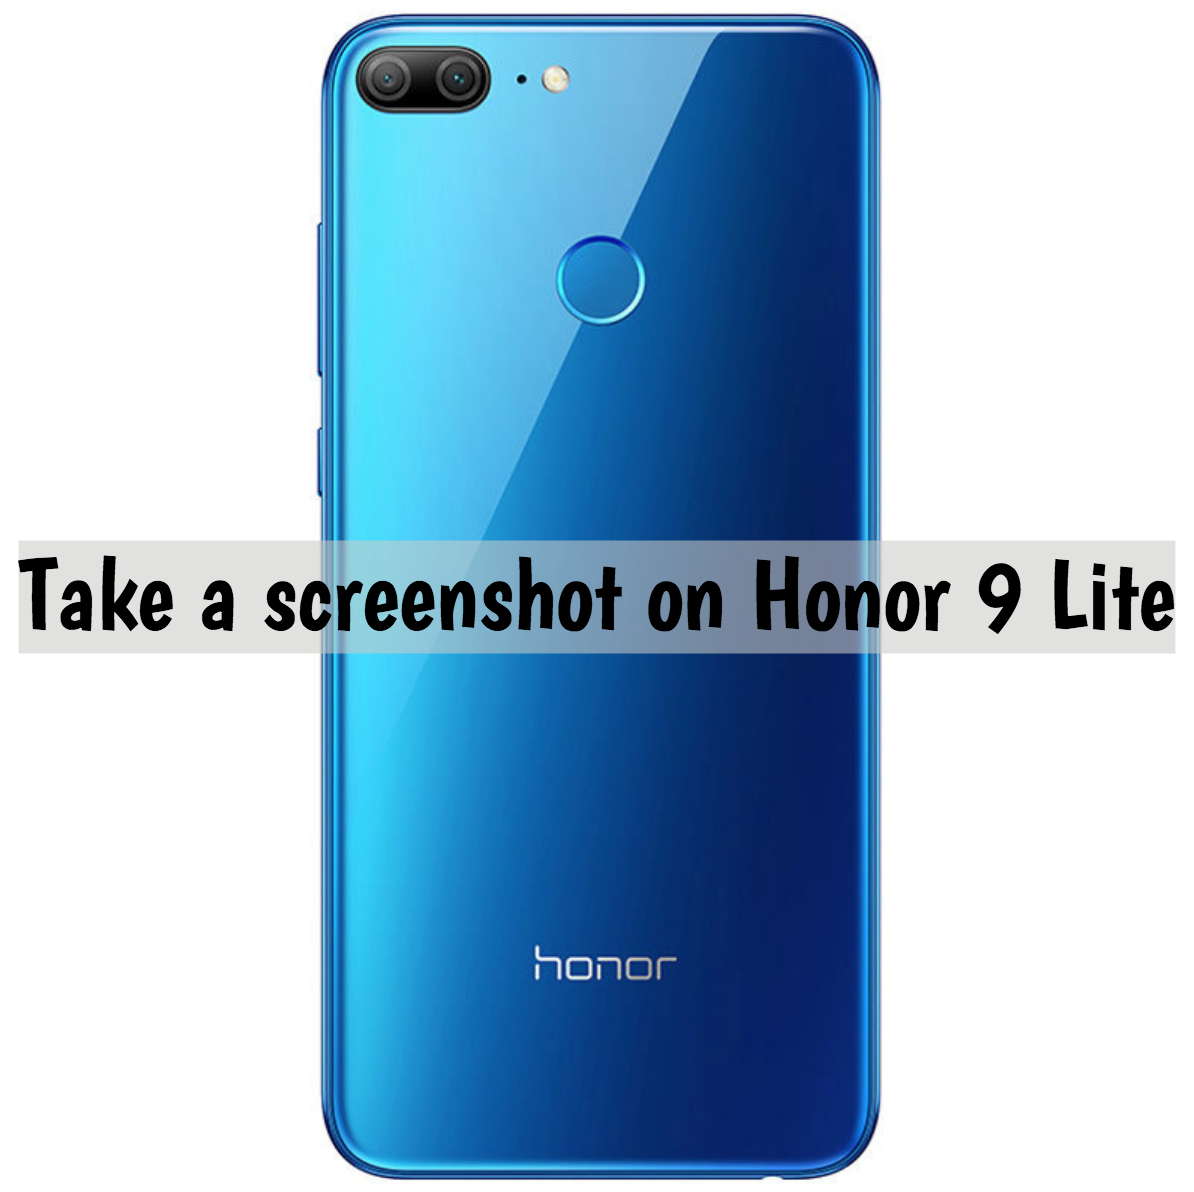 Take a screenshot on Honor 9 Lite